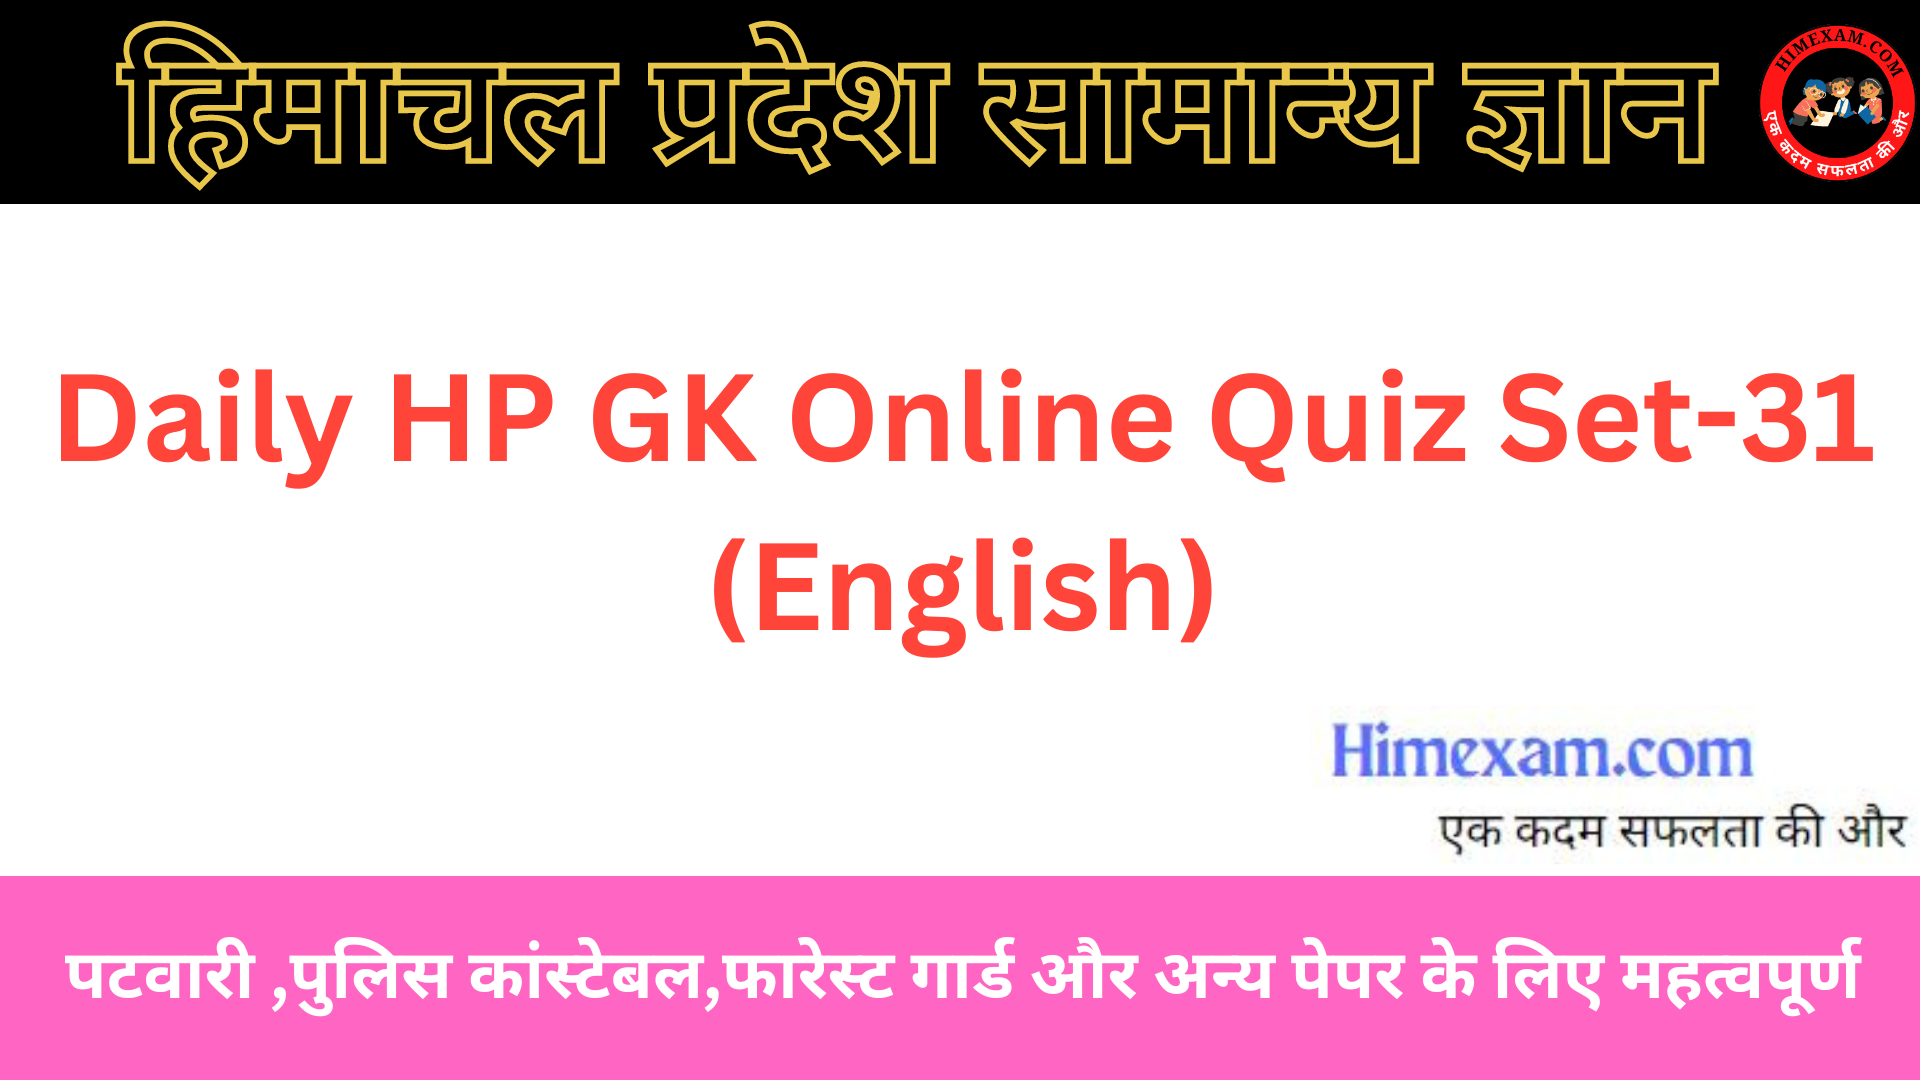 Daily HP GK Online Quiz Set-31 (English)